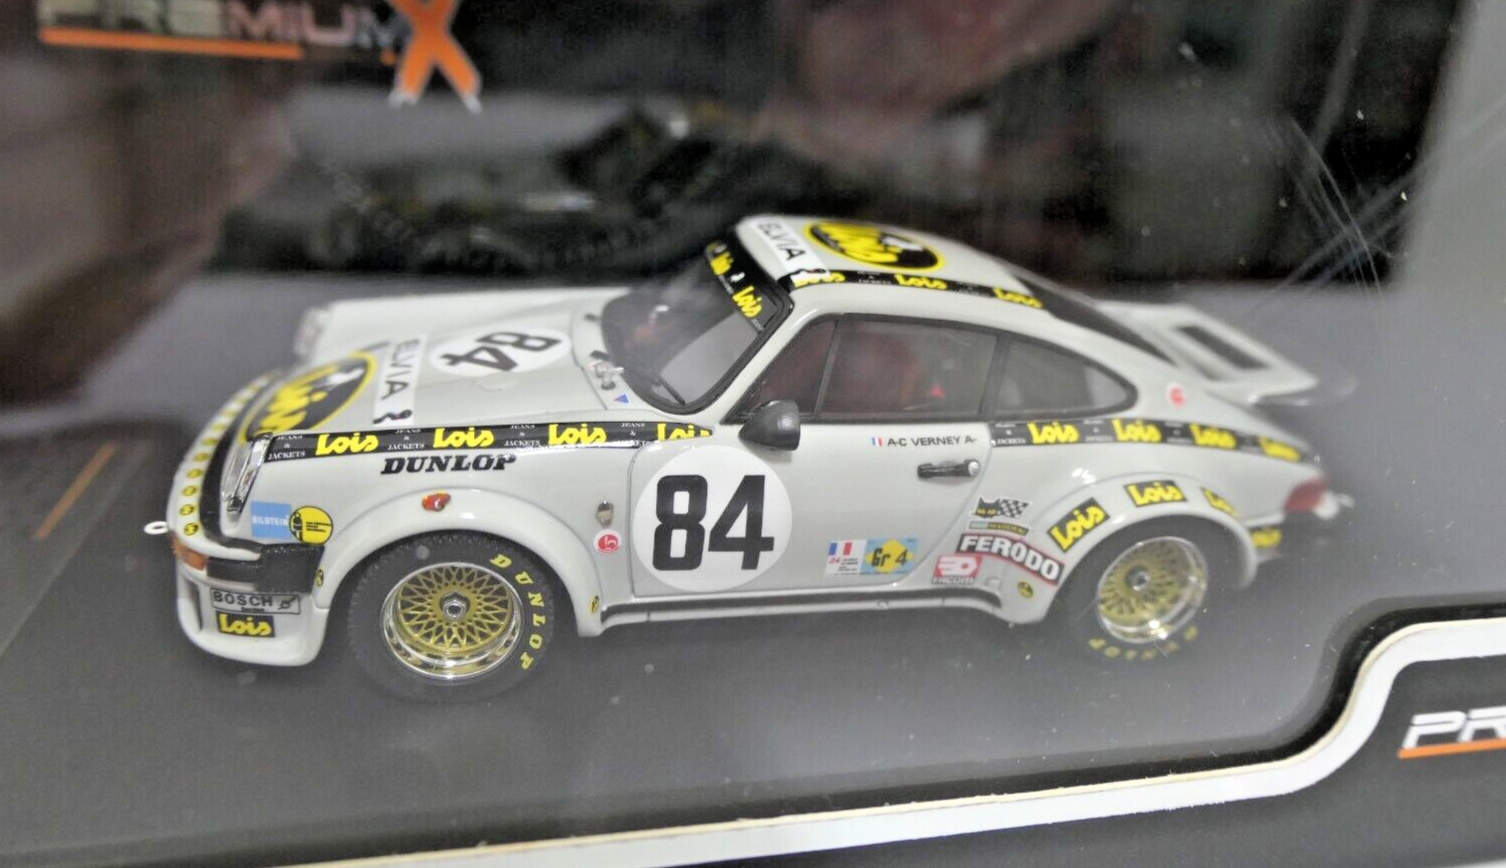 Premium-X 1:43 - Porsche 934 "Le Mans 1979 #84 - Verney/Bardinon/Metge"